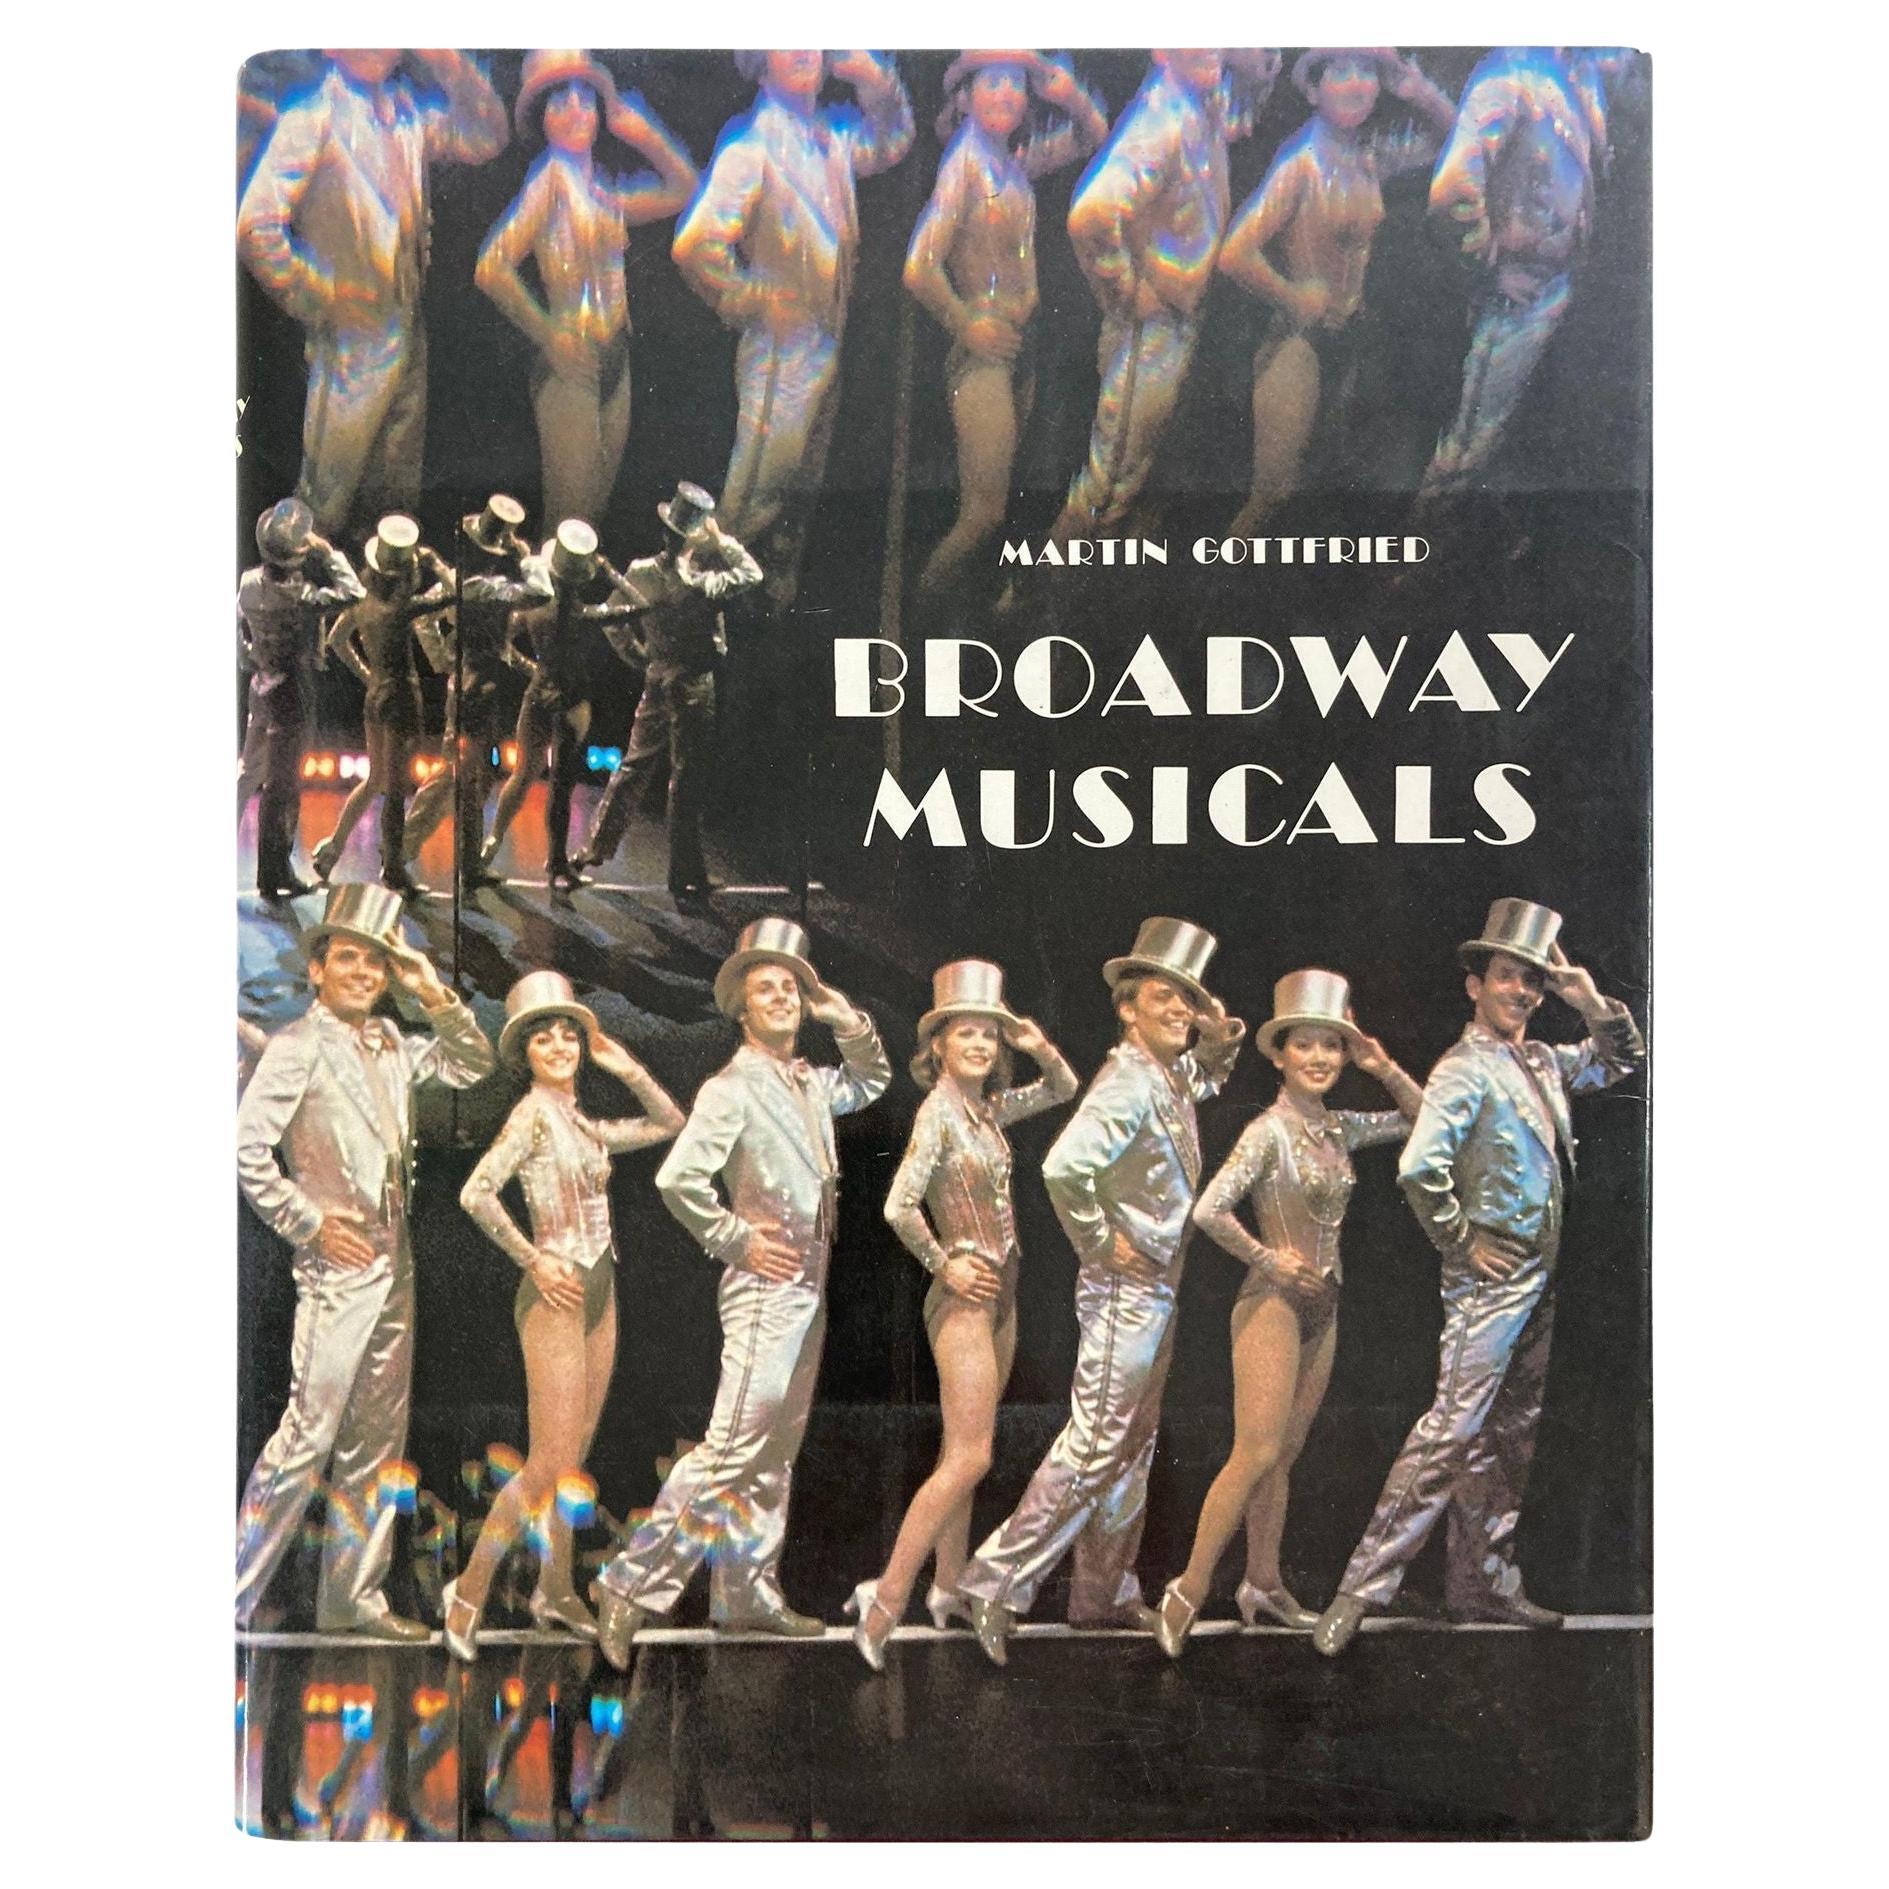 Grand livre à couverture rigide Broadway Musical Martin Gottfried en vente